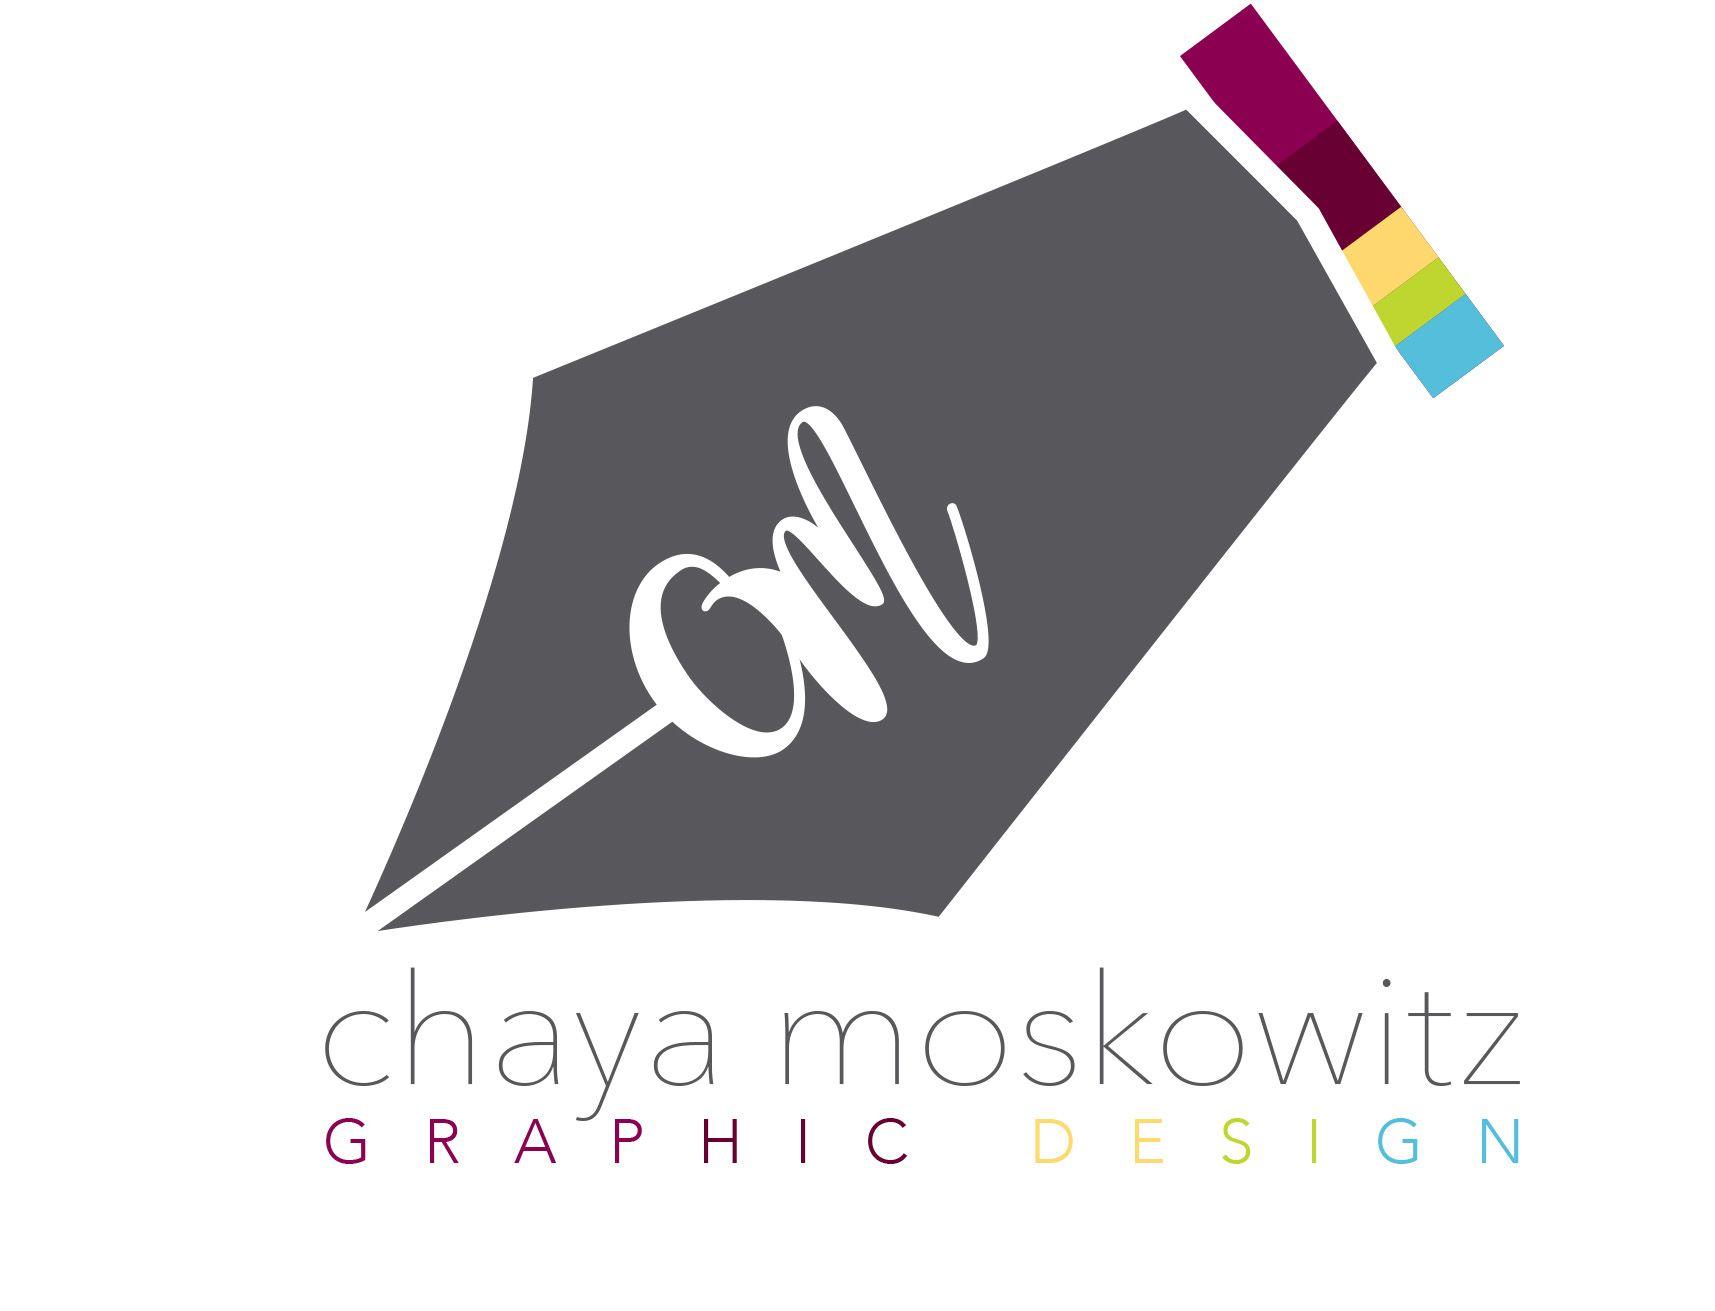 Graphic Designers Personal Logo - Graphic designer personal Logos